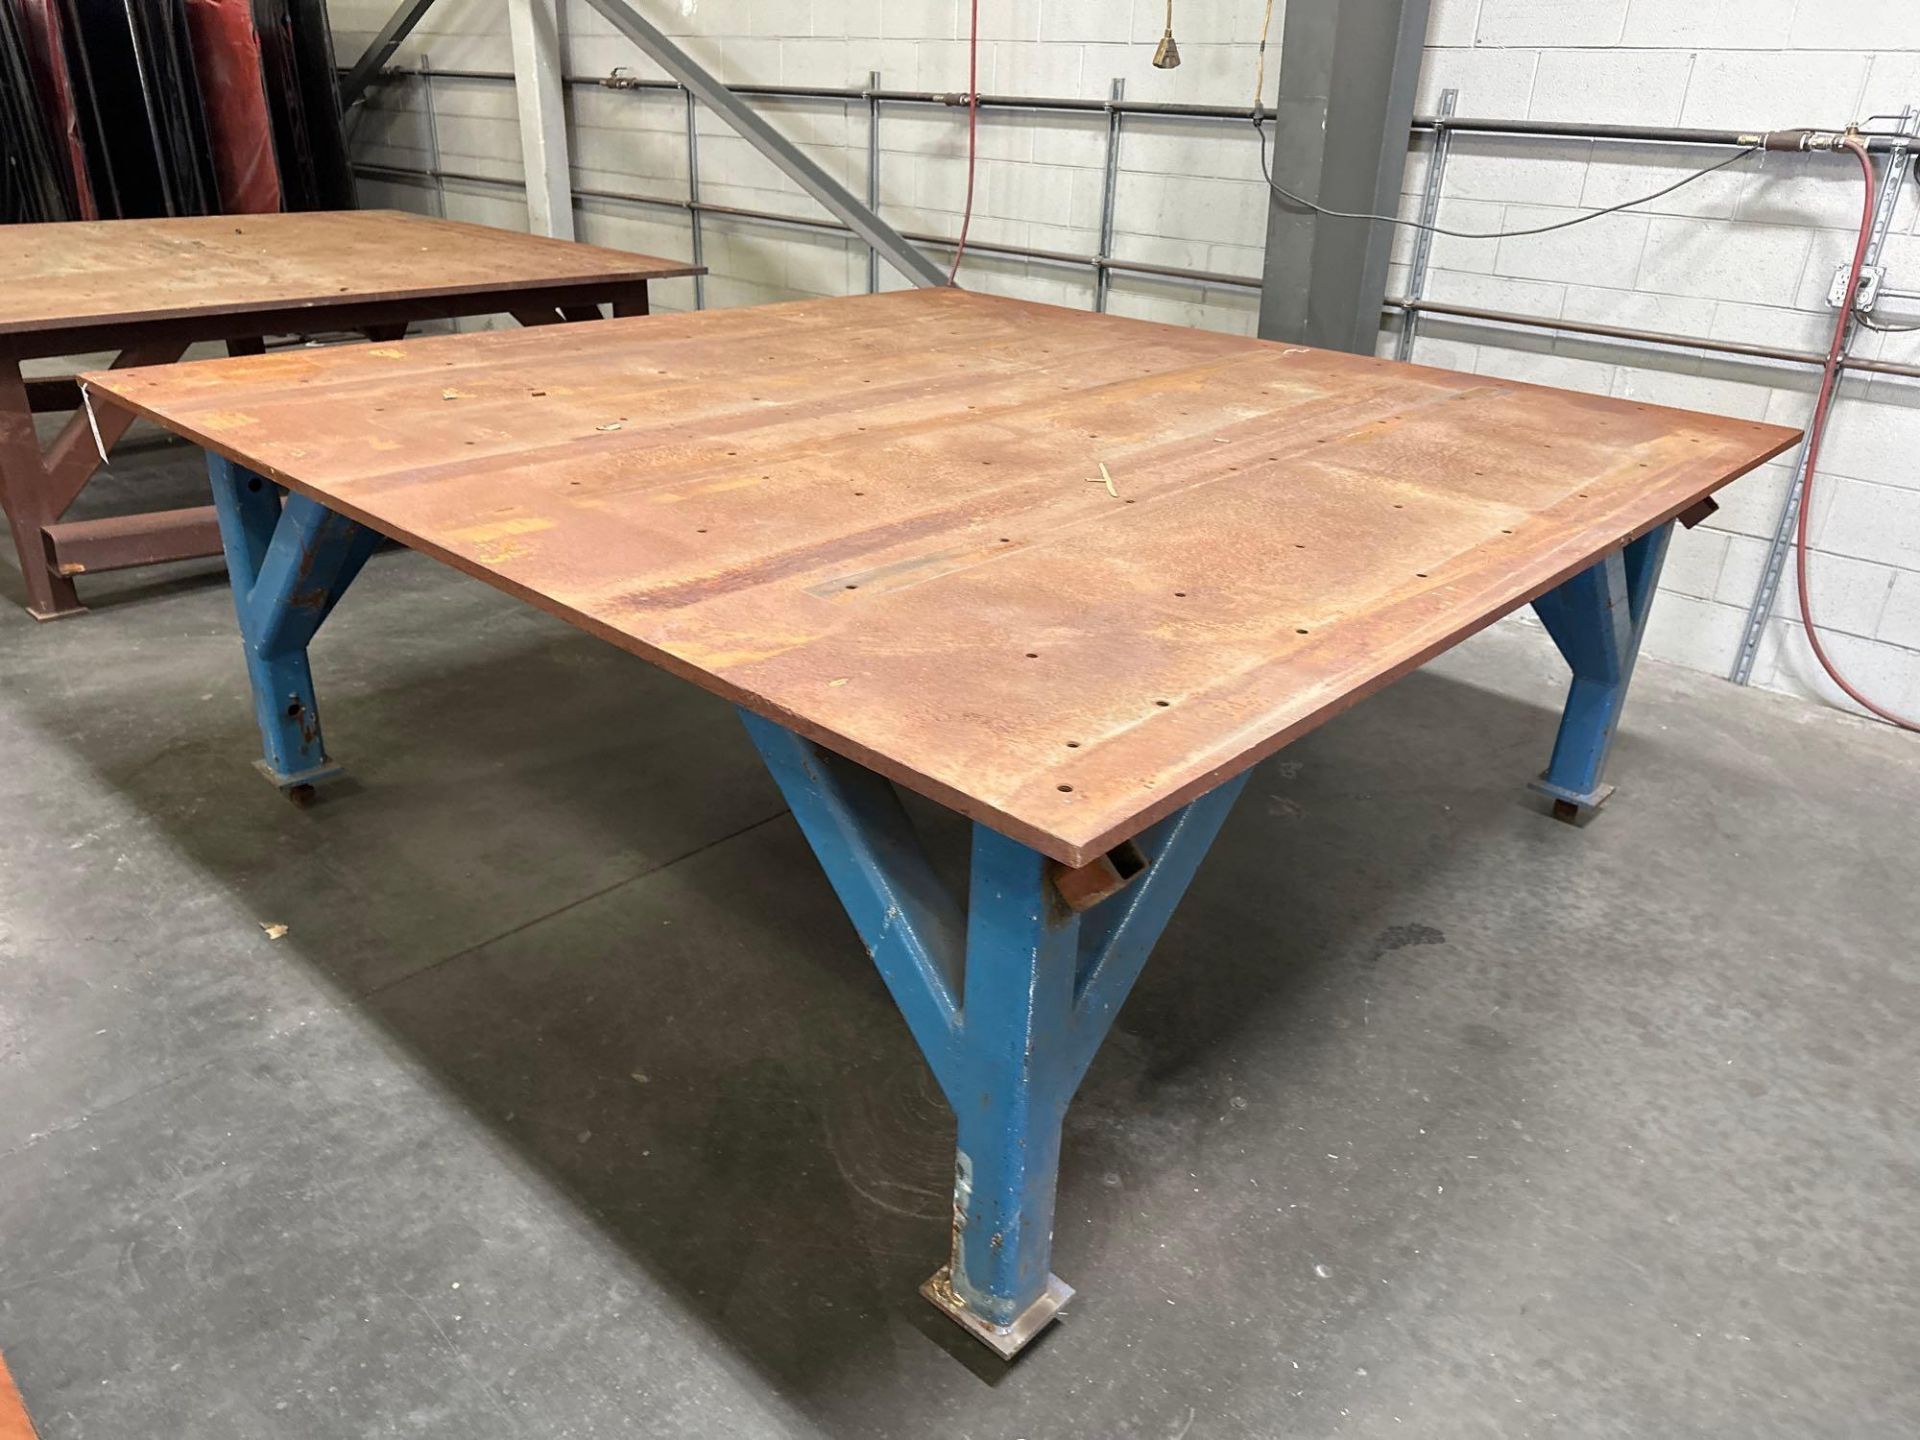 96”L x 96”W x 36”H Steel Welding Table - Image 2 of 4